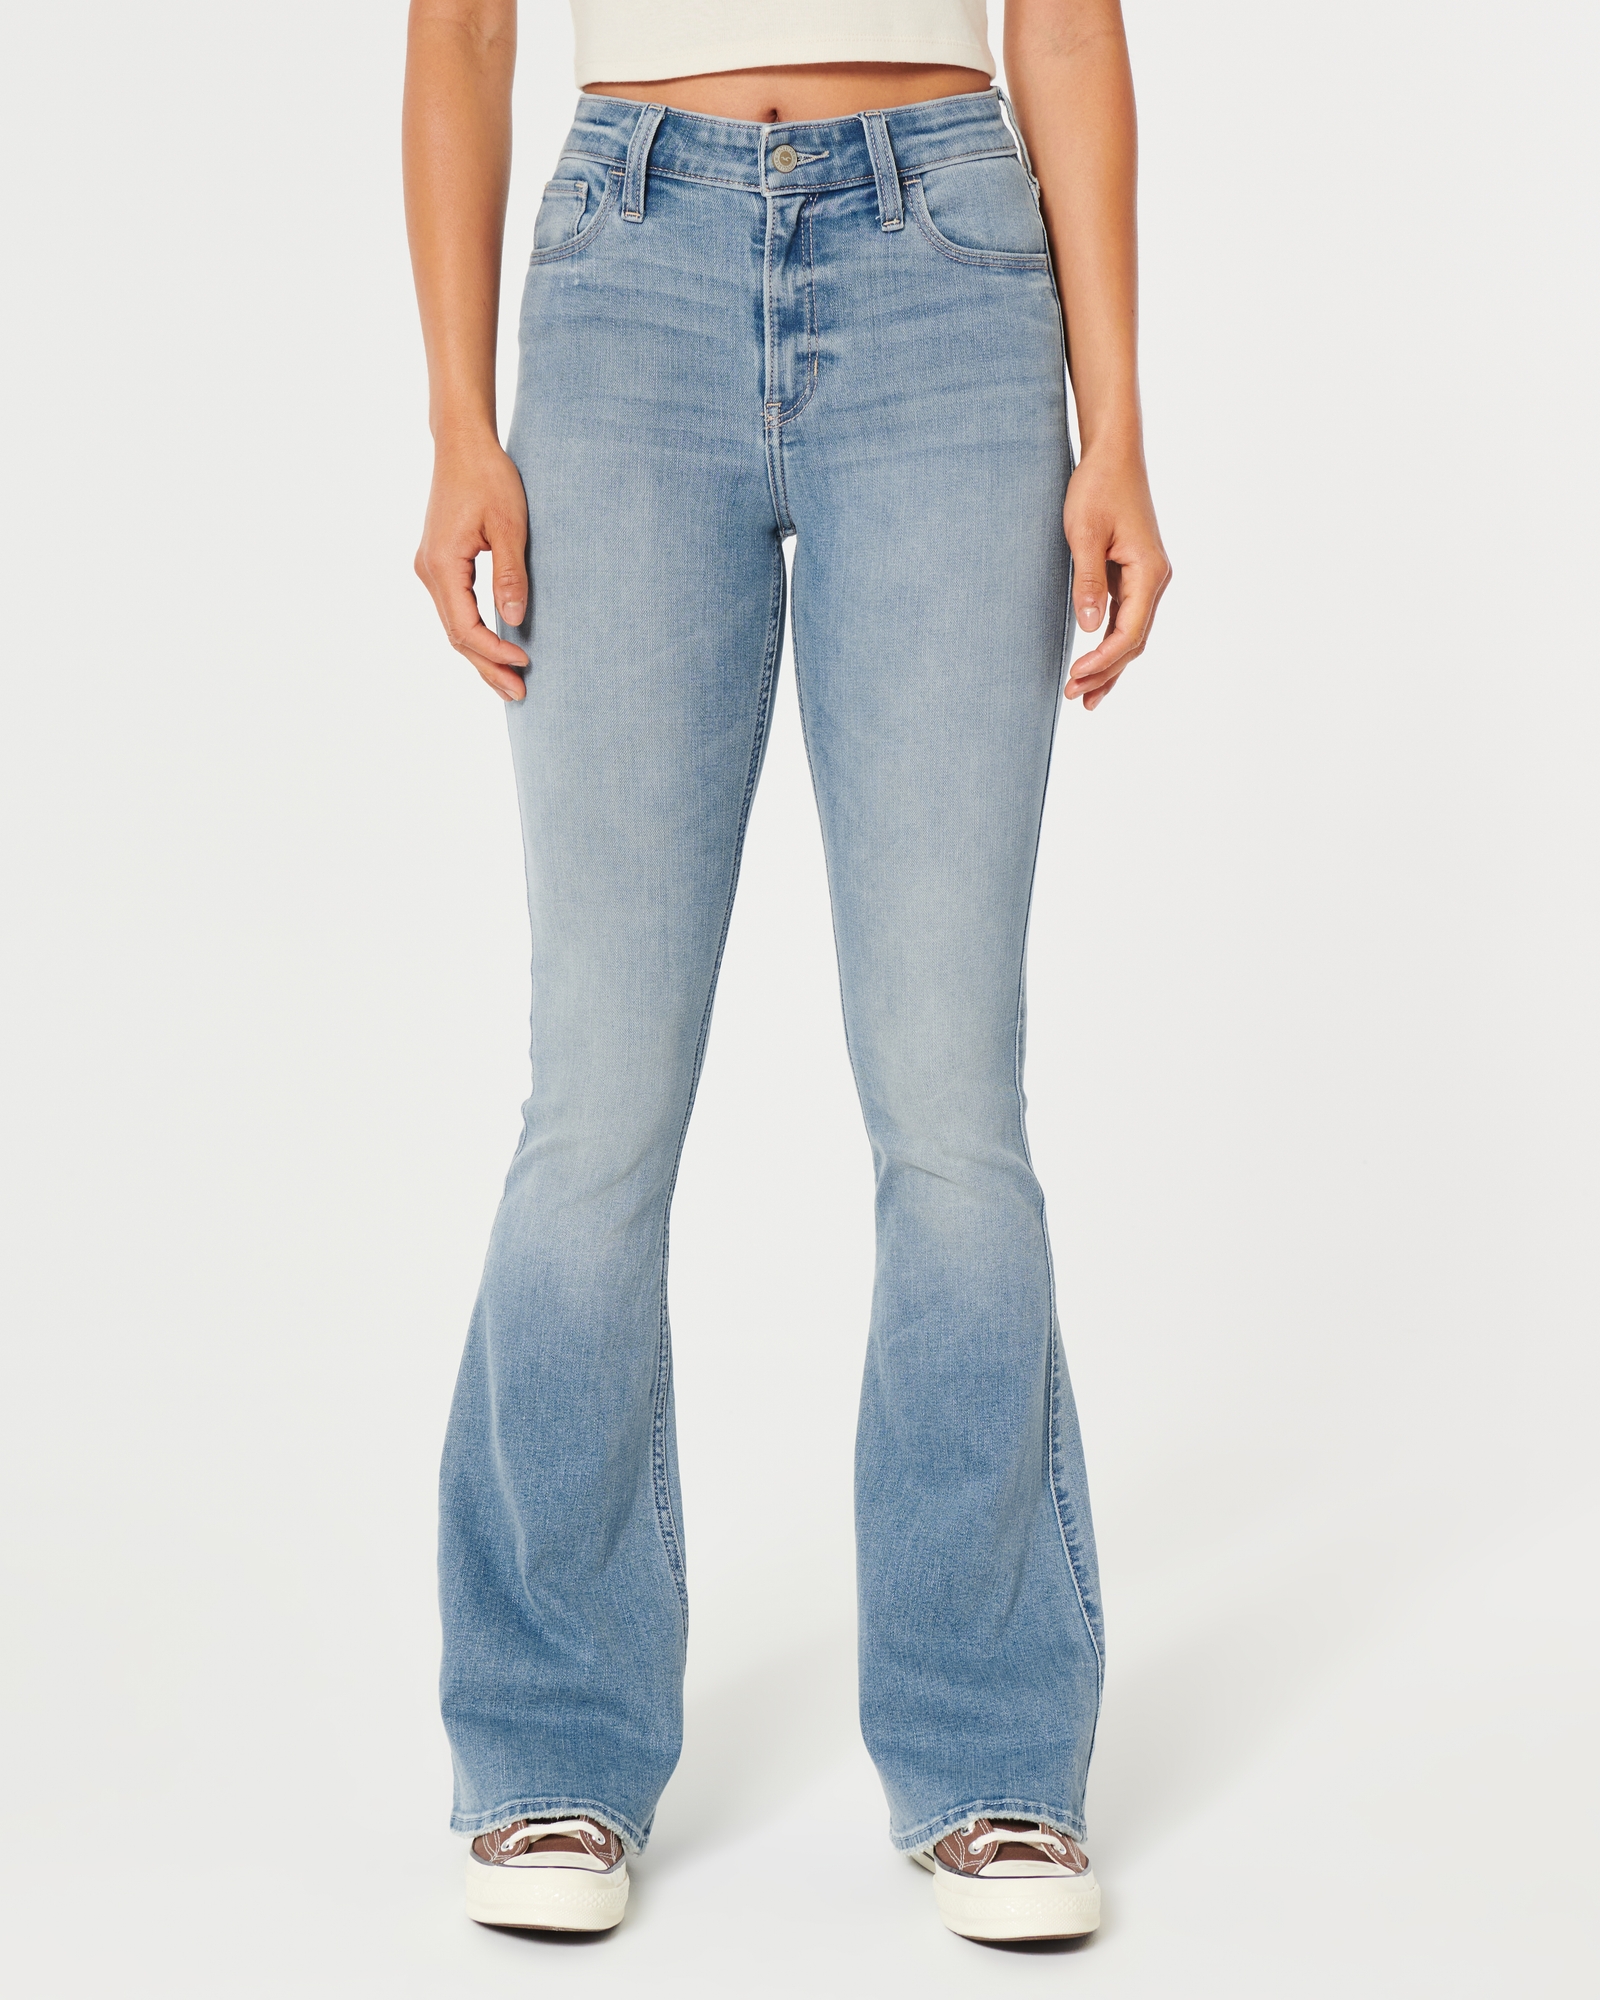 NWOT Wrangler Wrock 672 Medium Wash High Rise Flare Jeans Womens size 30 x  28